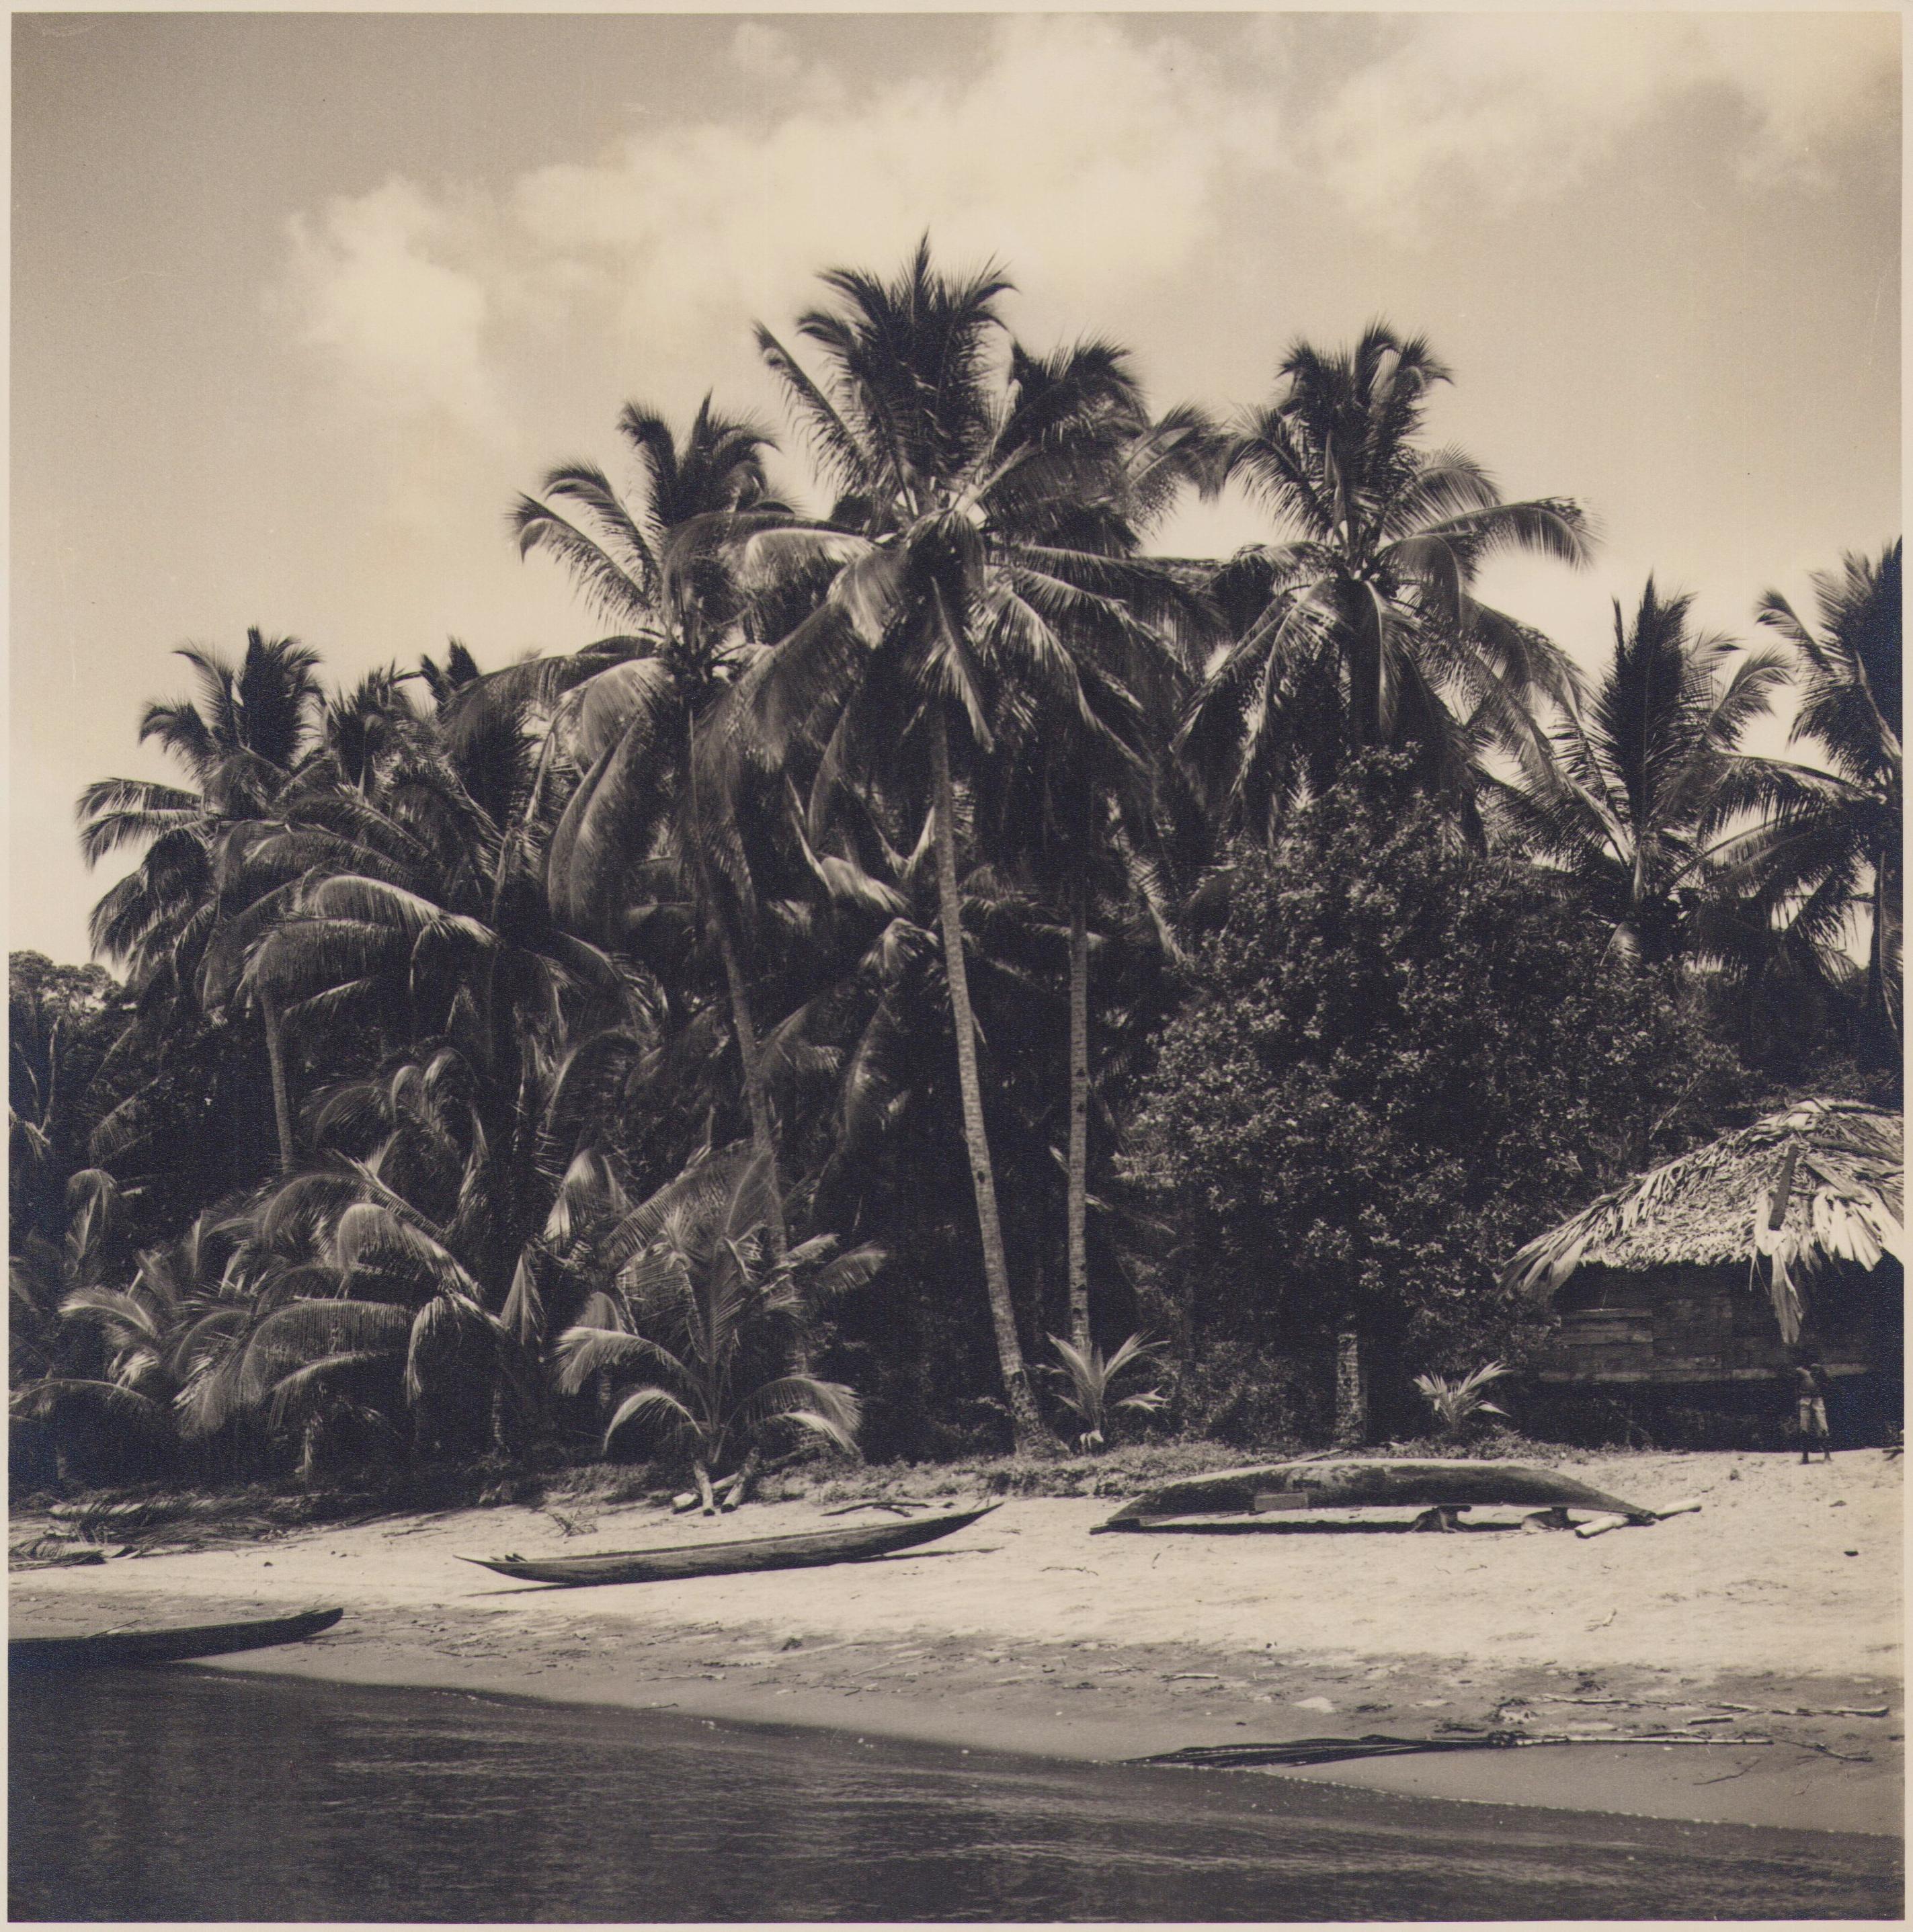 Hanna Seidel Portrait Photograph - Colombia, Palmtrees, Beach, Black and White Photography, 1960s, 24, 4 x 24, 1 cm